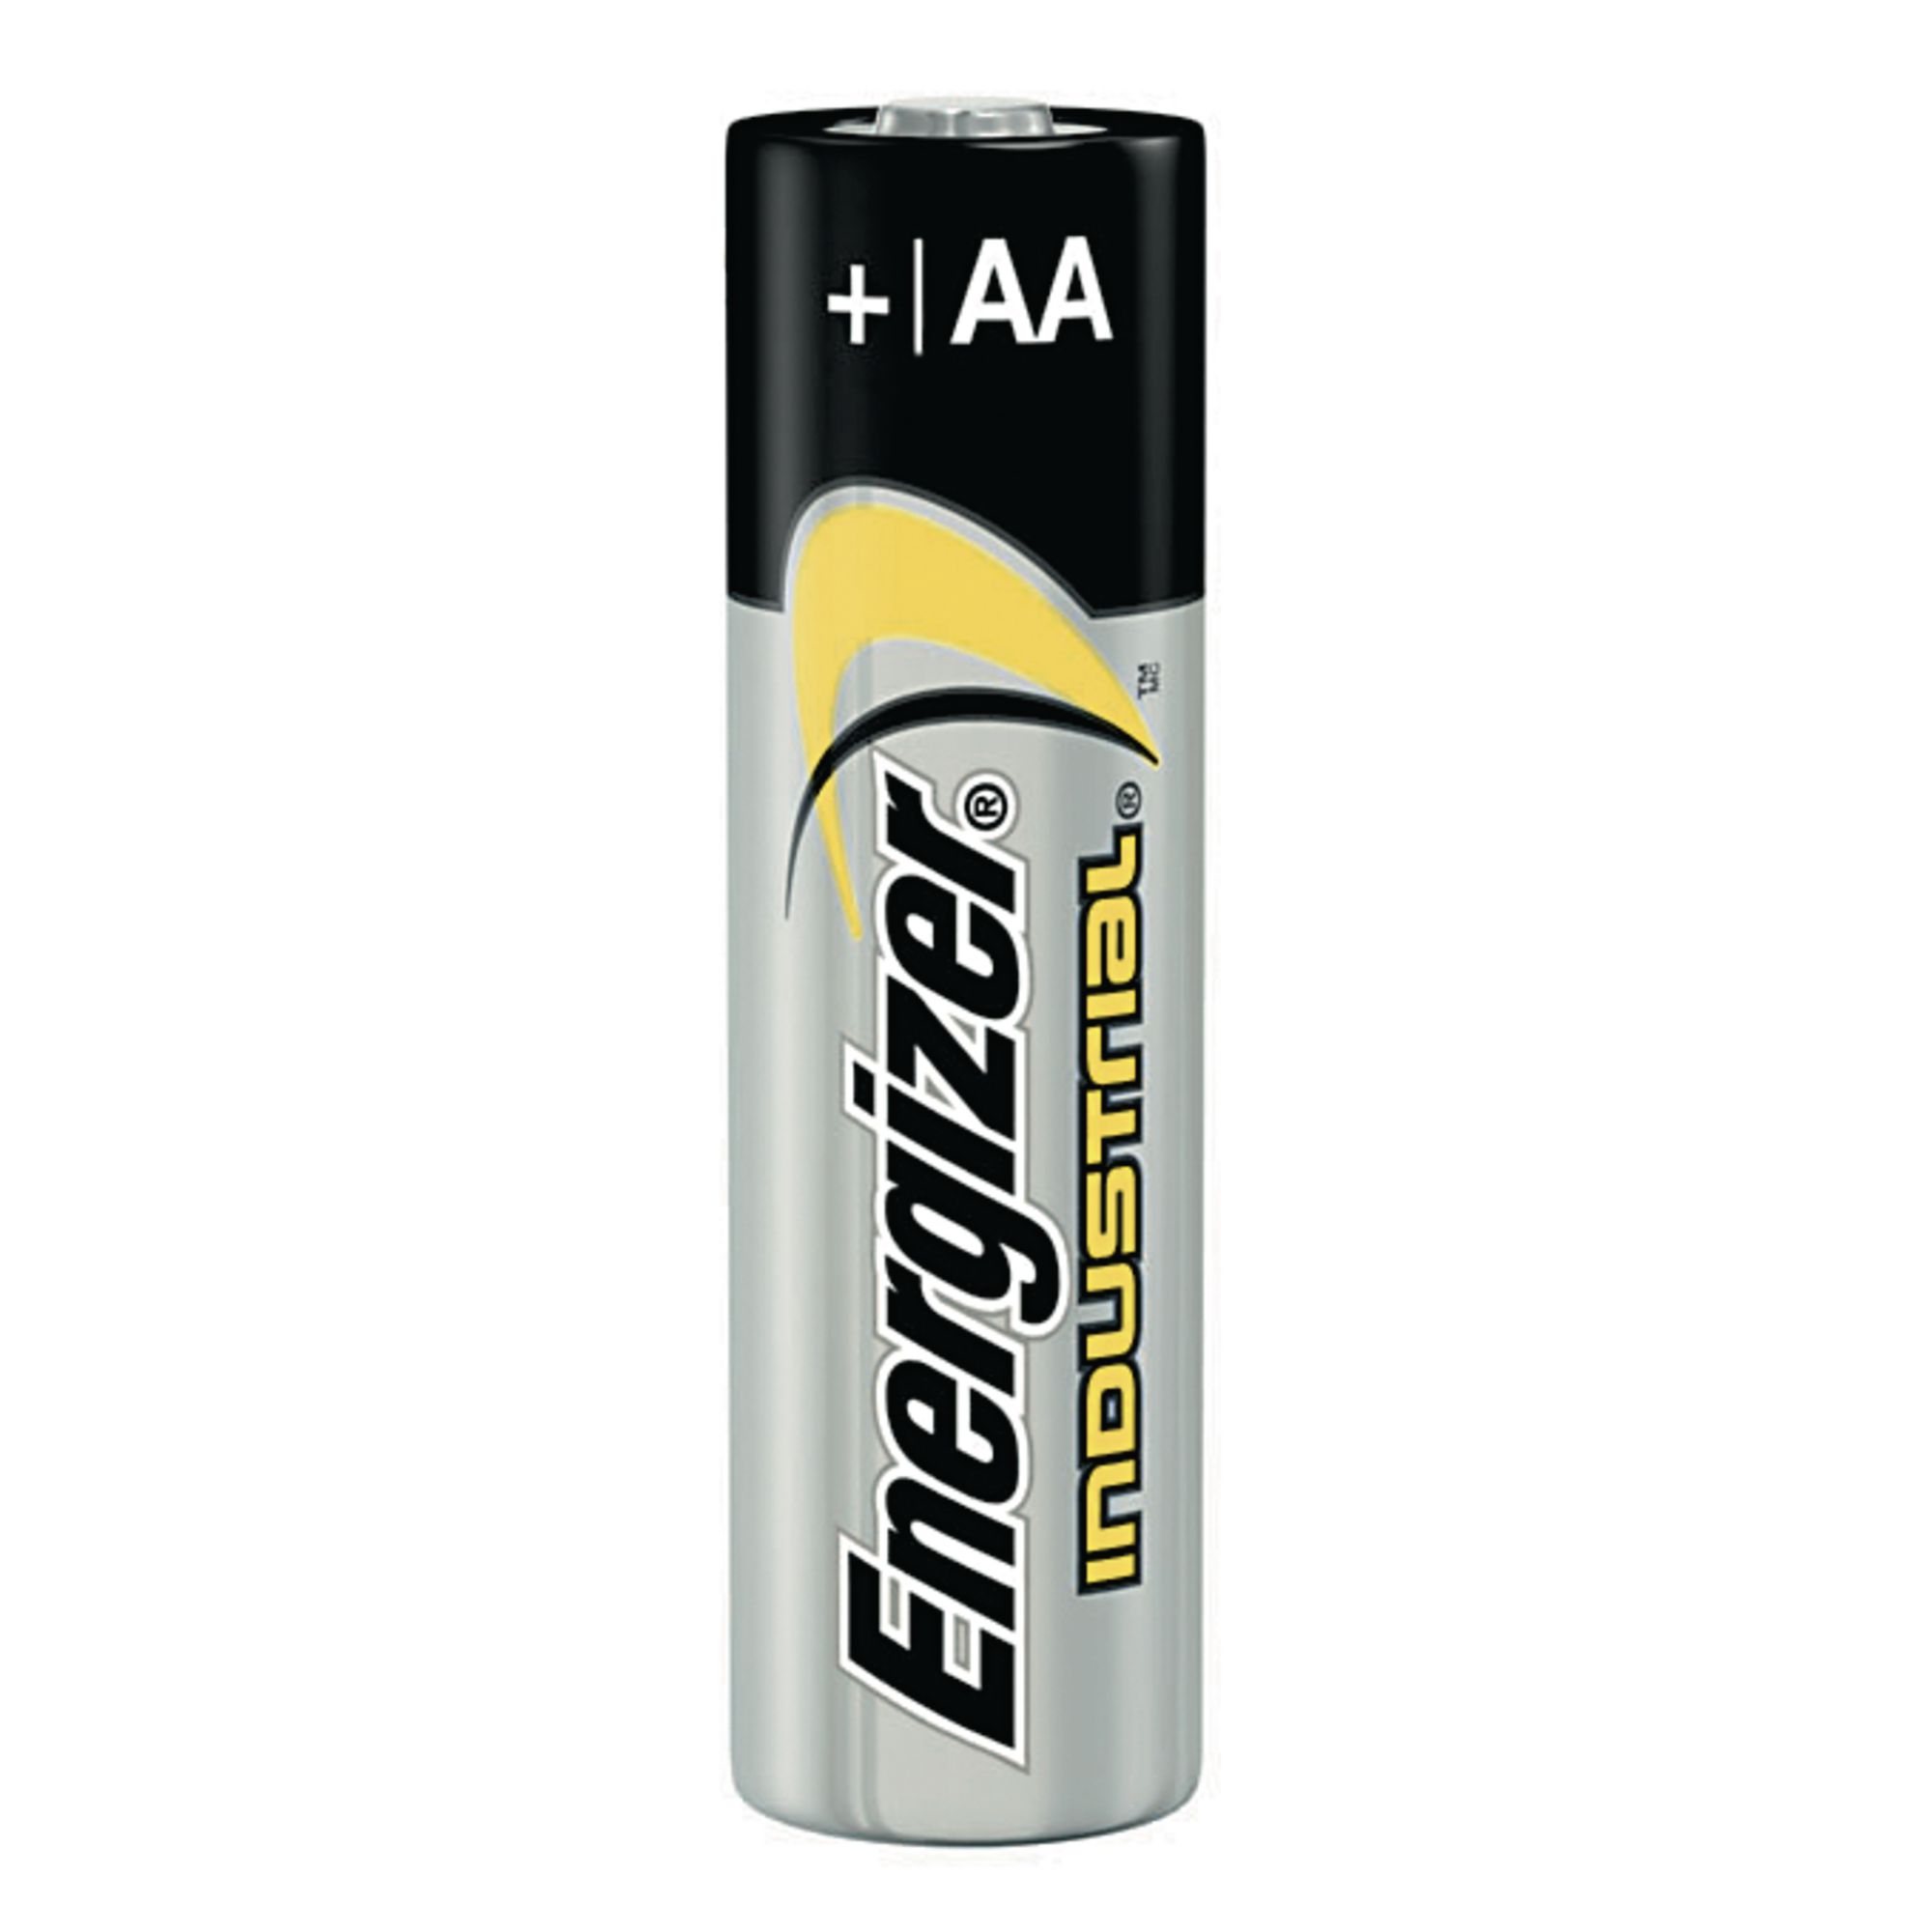 Aa battery. Батарейки Energizer Industrial AAA-lr03. Energizer AAA Alkaline 1,5v. Батарейка мизинчиковая AAA (lr3) Energizer Industrial. Energizer Industrial щелочной элемент АА 1.5V ( 4 шт).